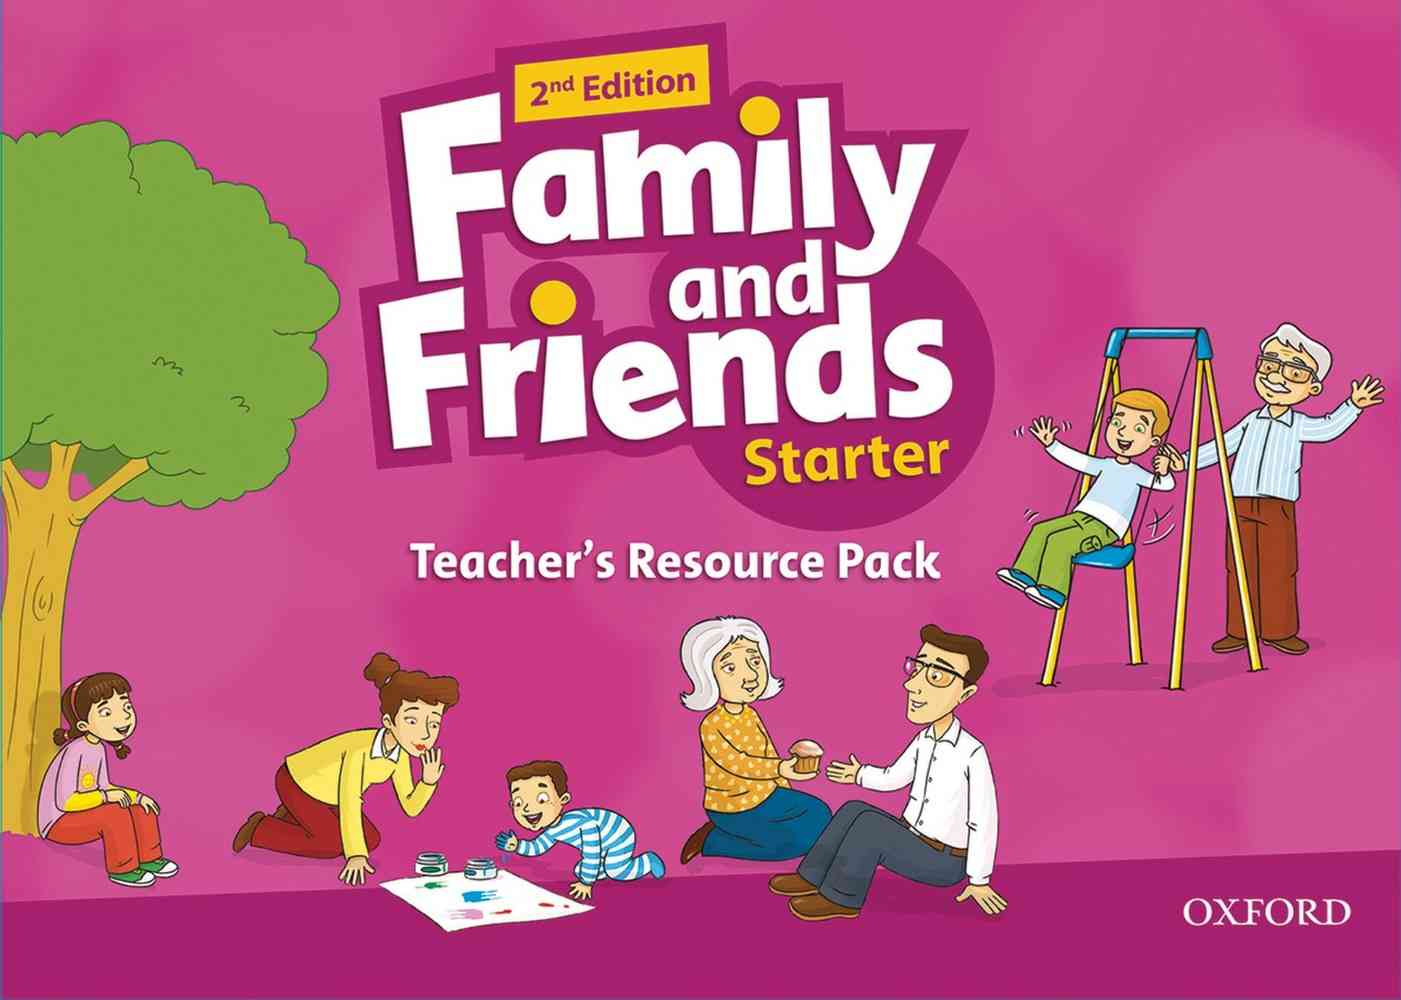 Family and Friends 2nd Edition: Starter Teacher’s Resource Pack niculescu.ro imagine noua